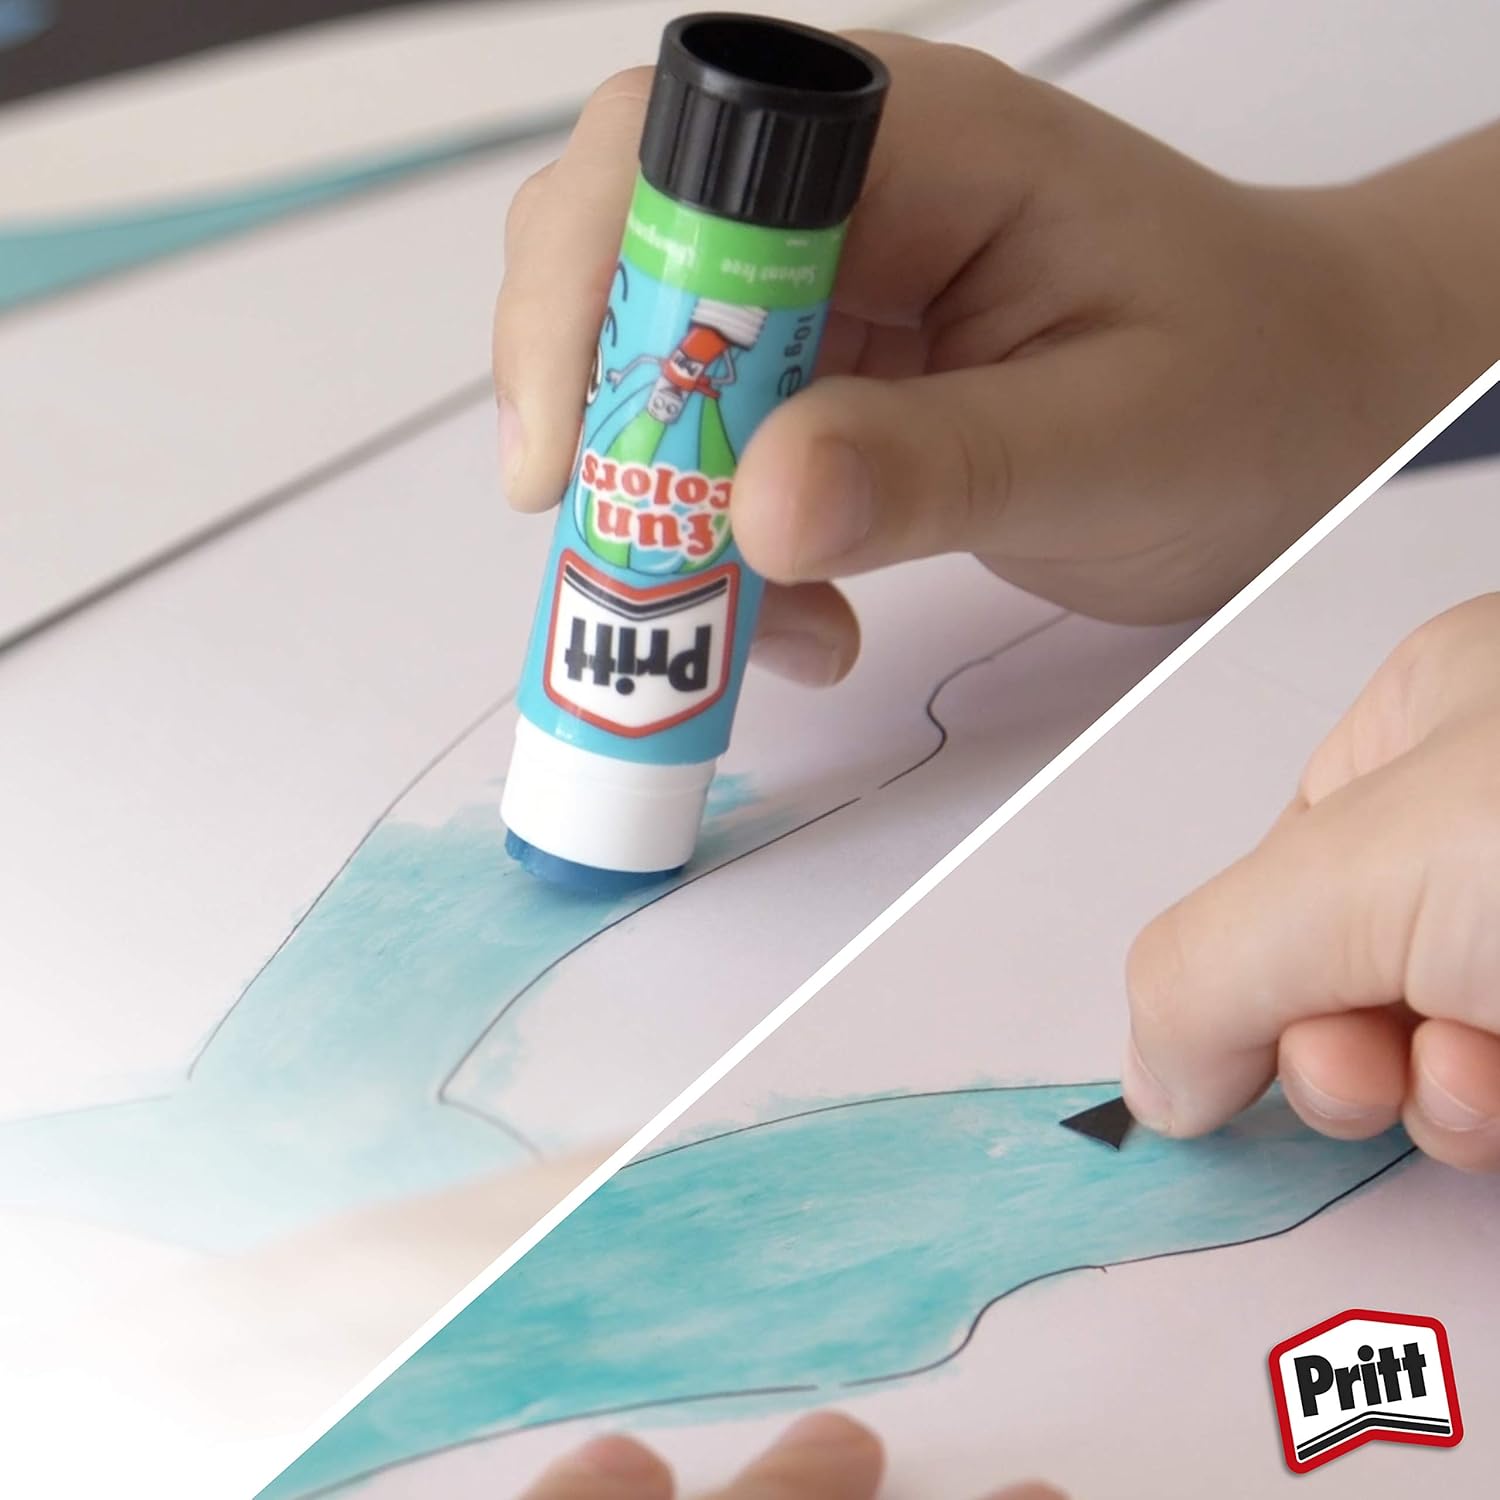 Pritt Rainbow Coloured Glue Sticks, Safe & Child-Friendly Craft Glue for Arts & Crafts Activities